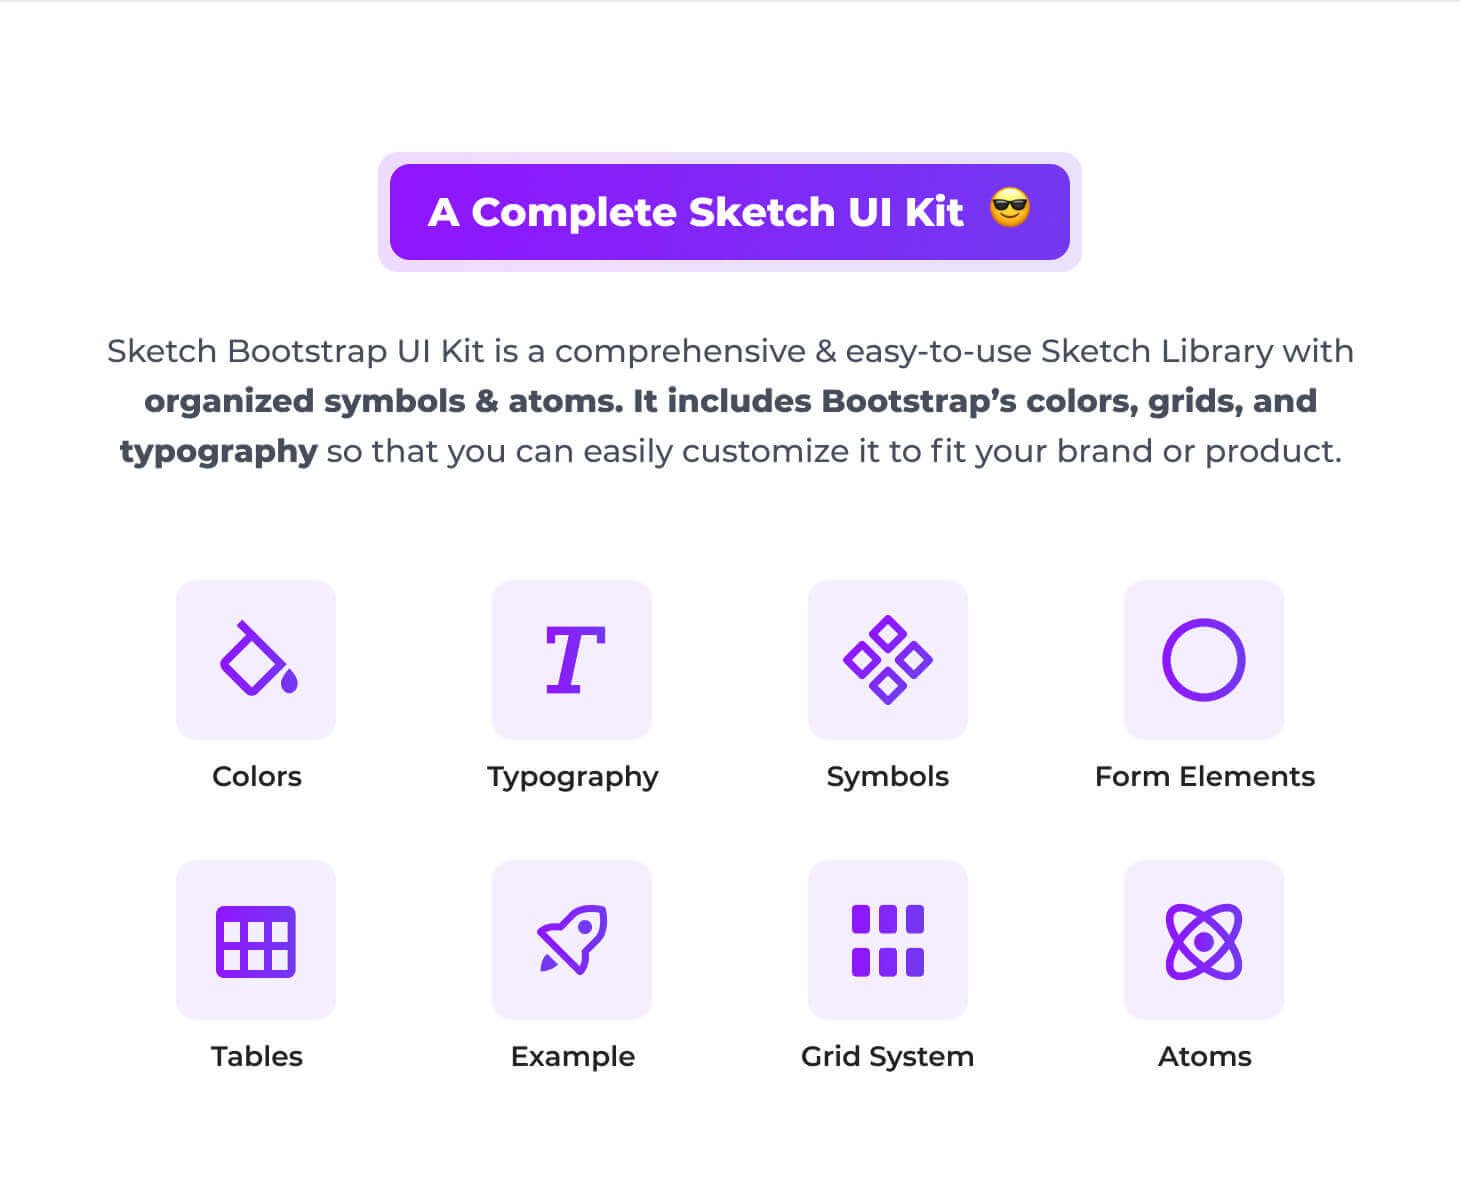 A Complete Sketch UI Kit